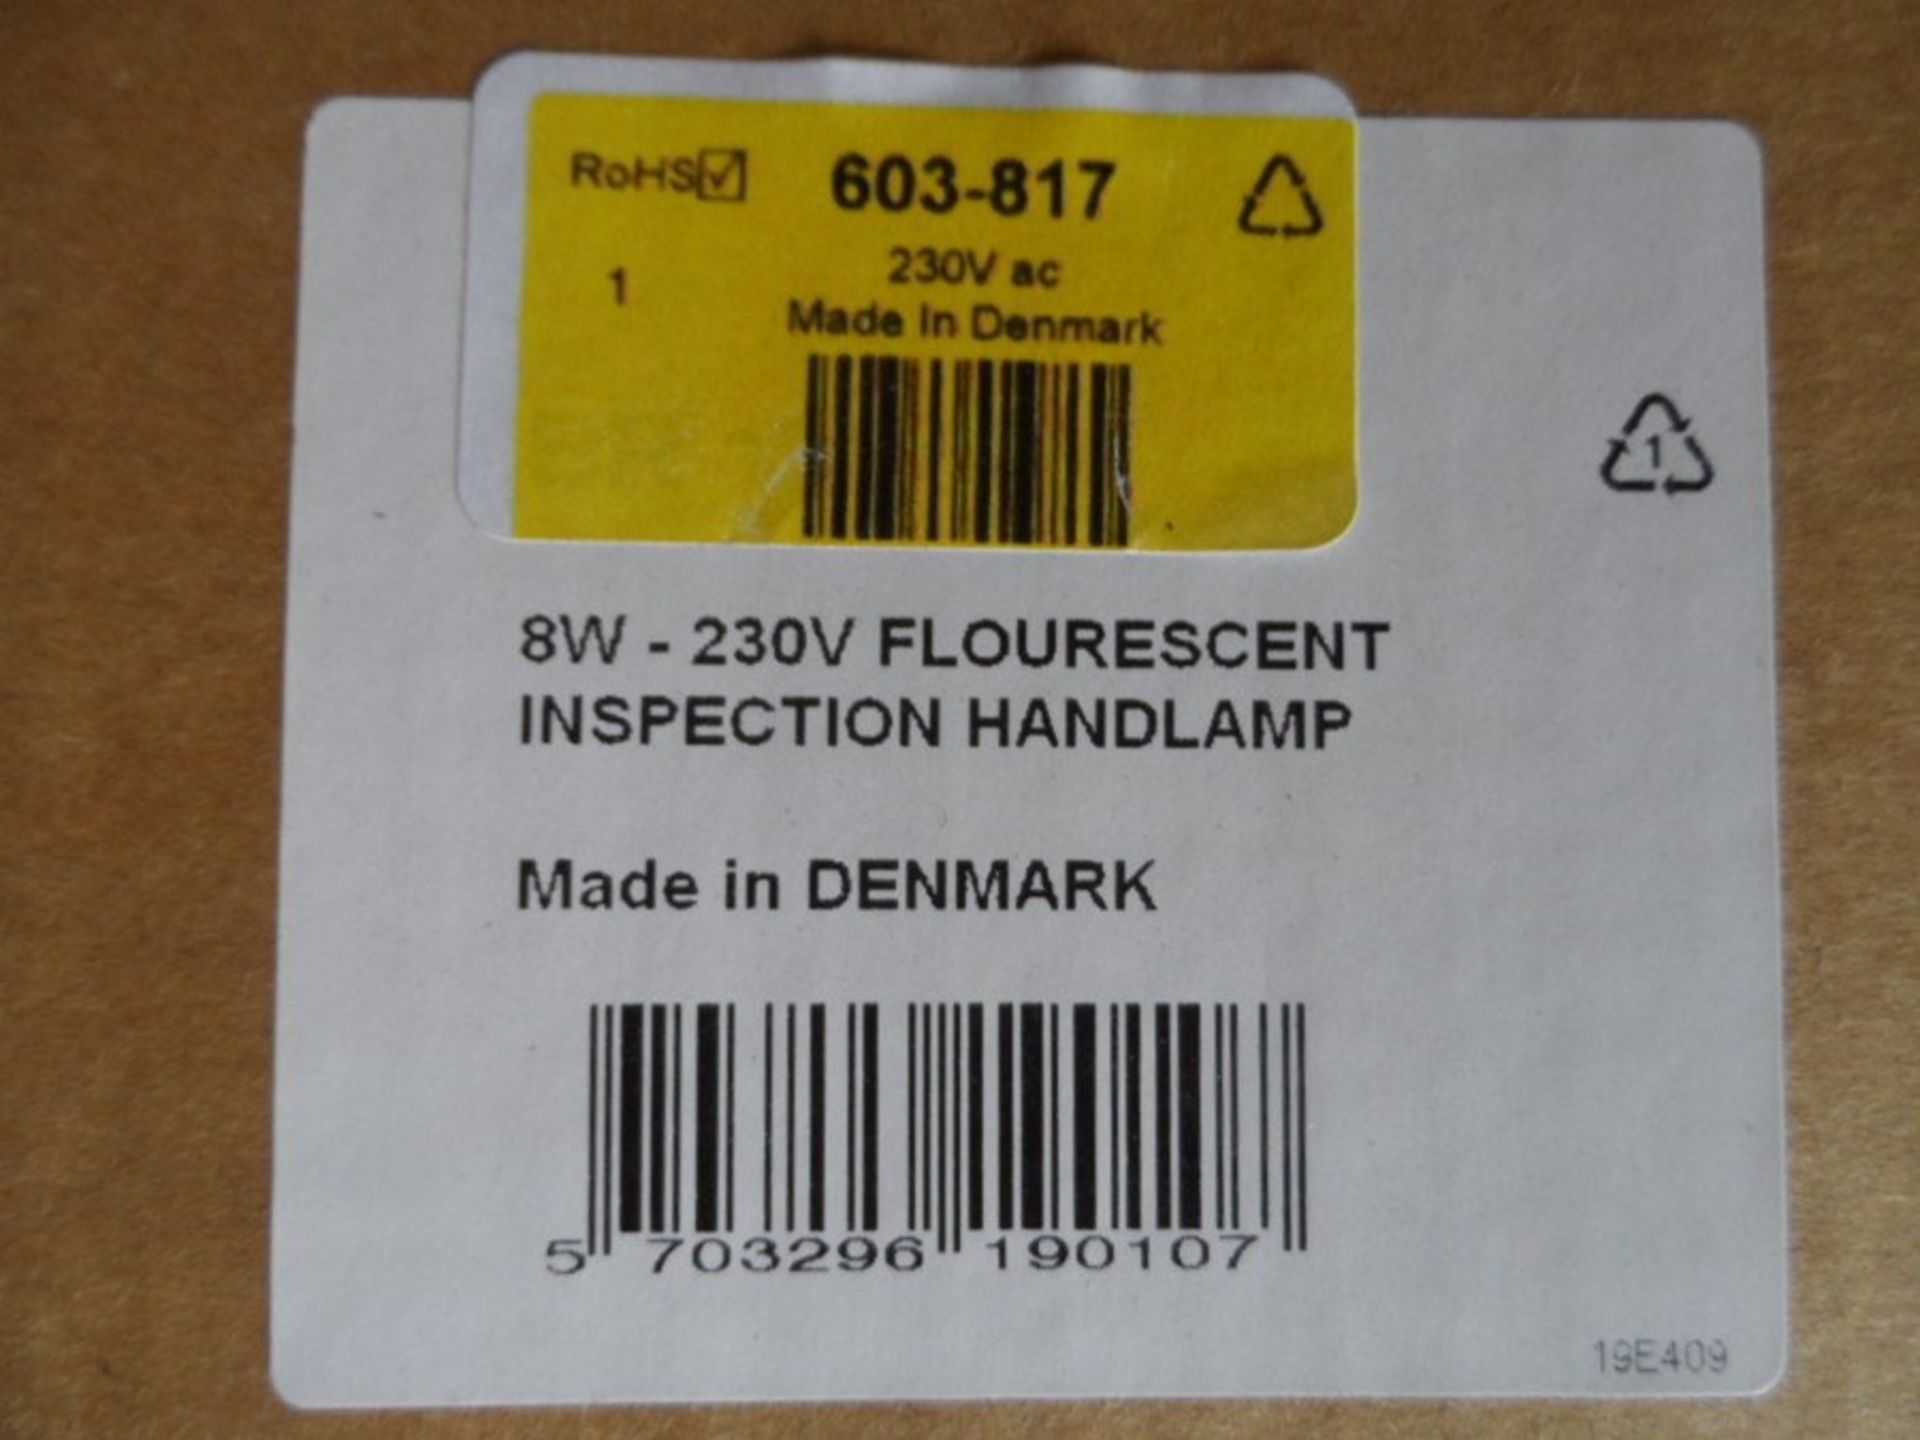 Inspection lamp - Fluorescent inspection handlamp 8W 240V -Briticent 1005 603817 - Image 2 of 2